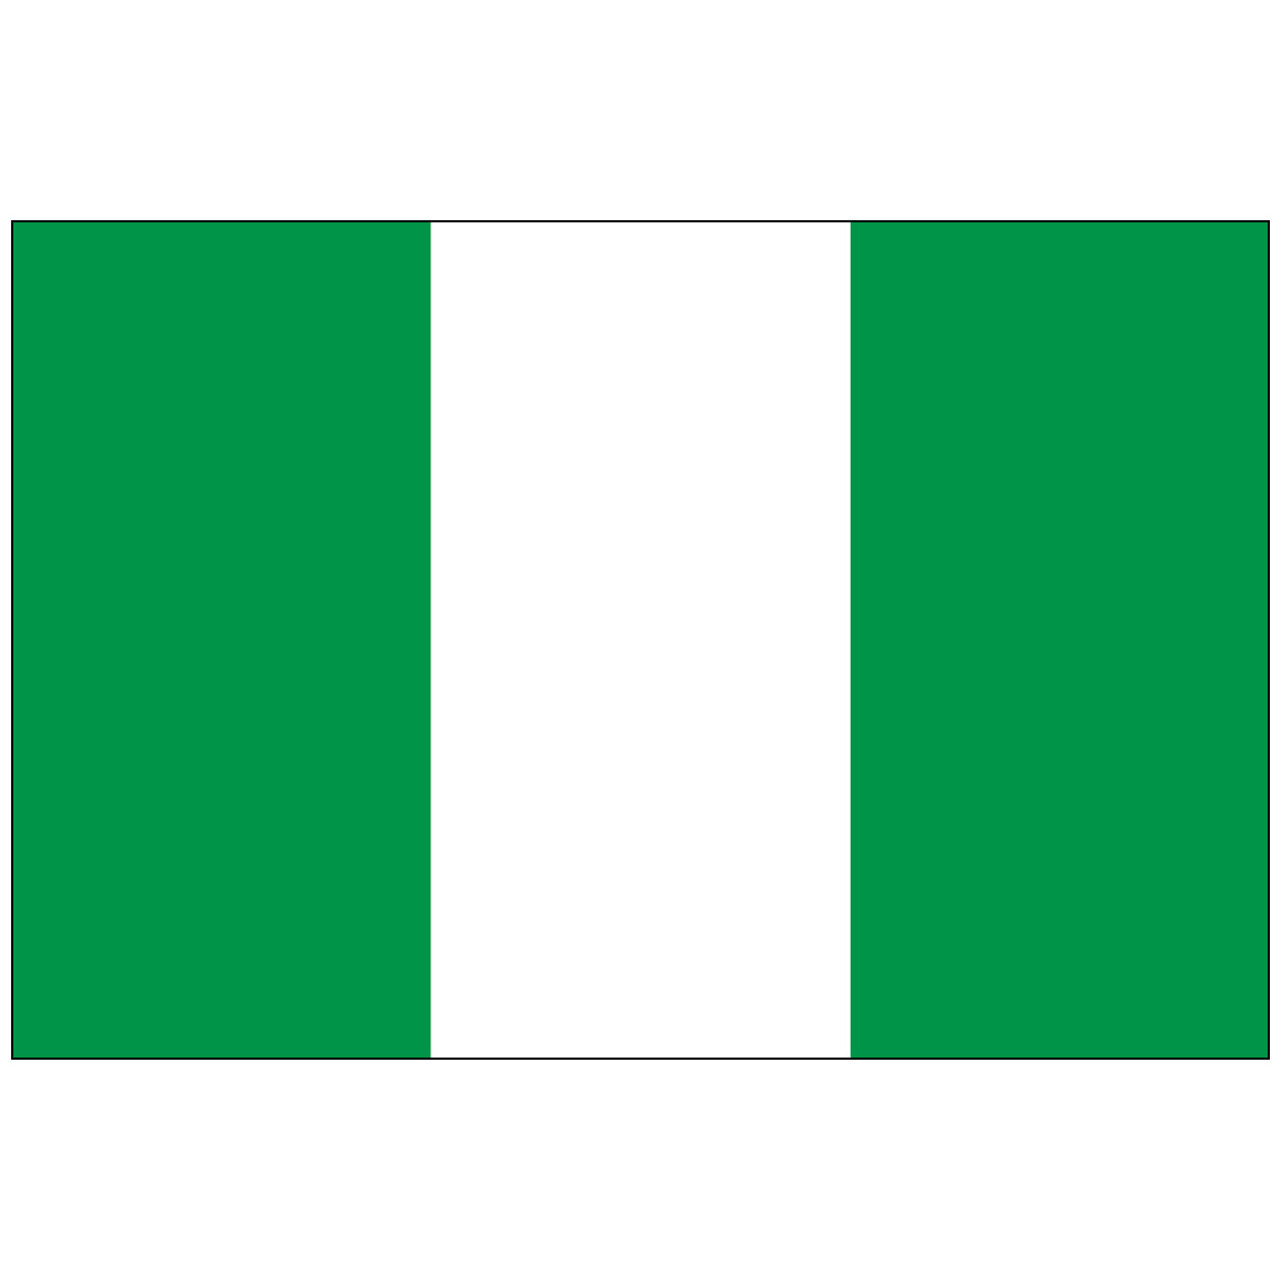 Nigeria Flag | American Flags Express